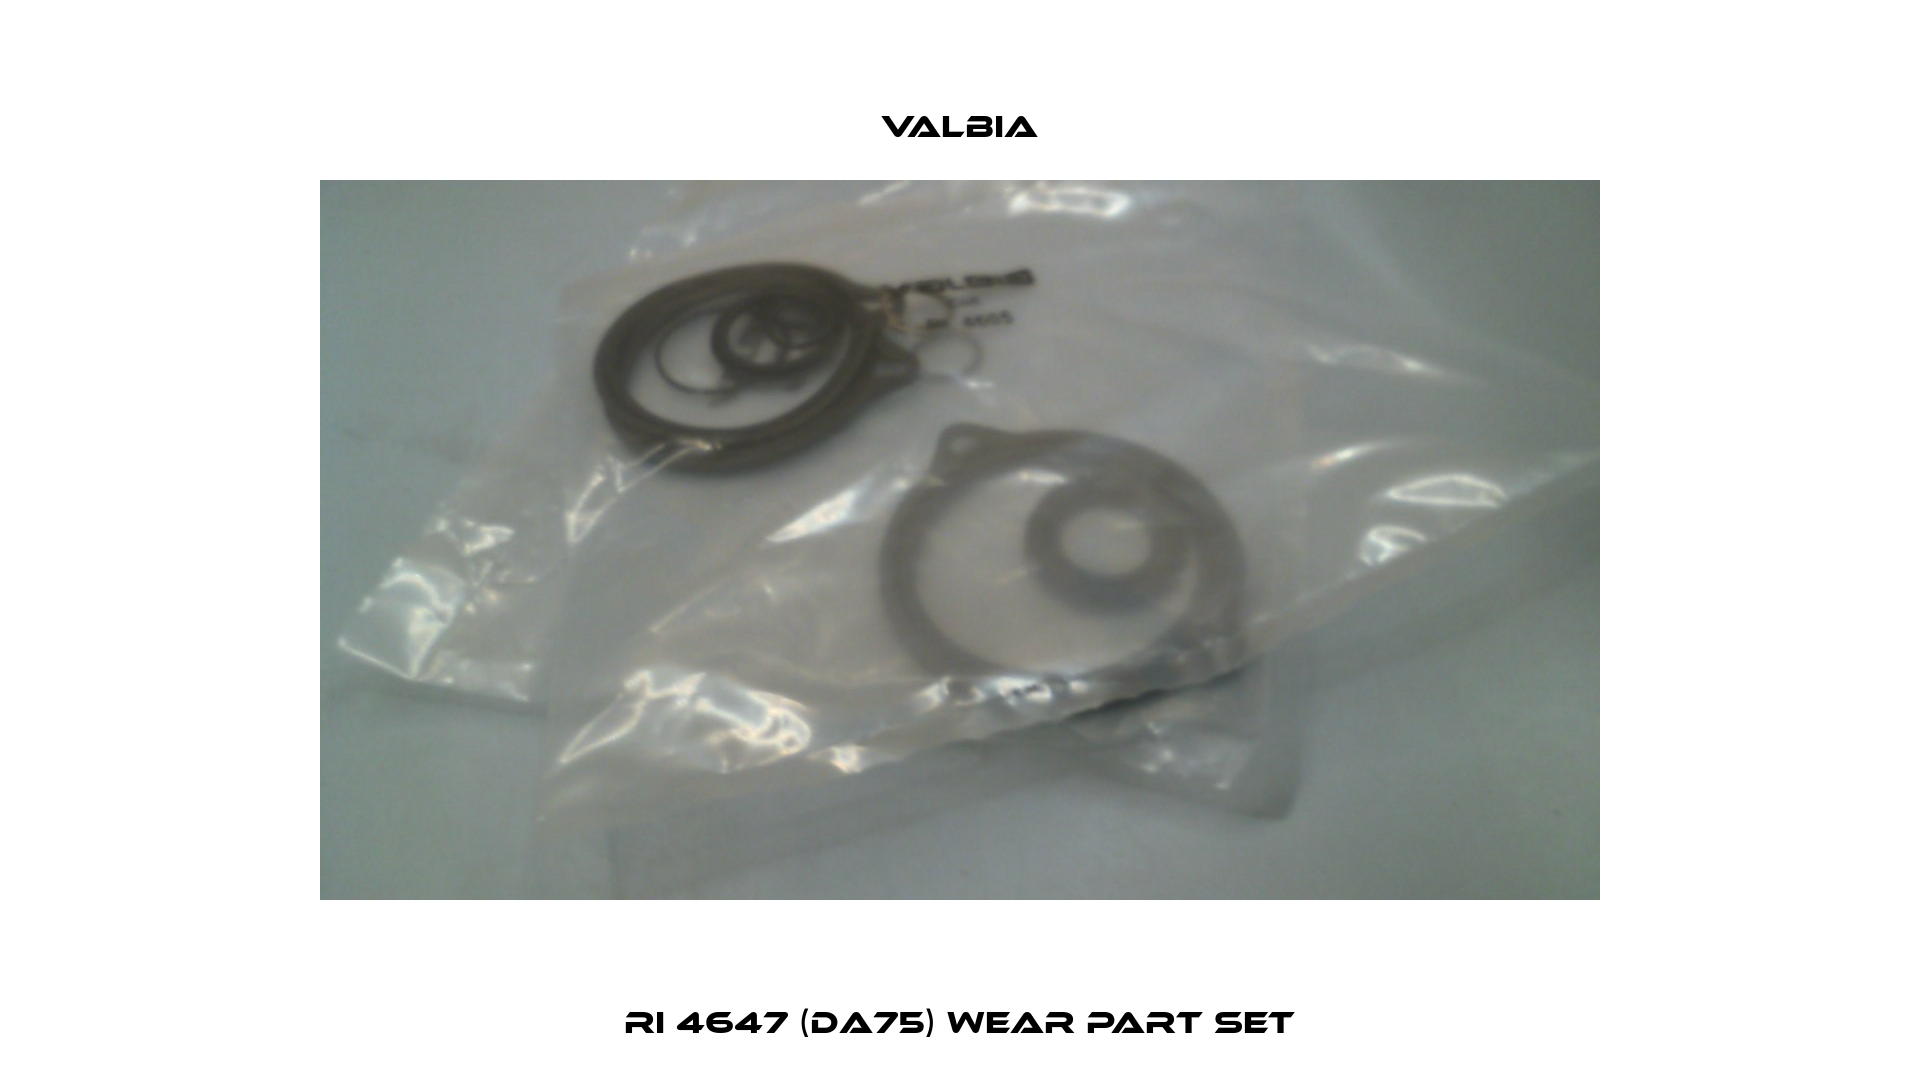 RI 4647 (DA75) wear part set Valbia